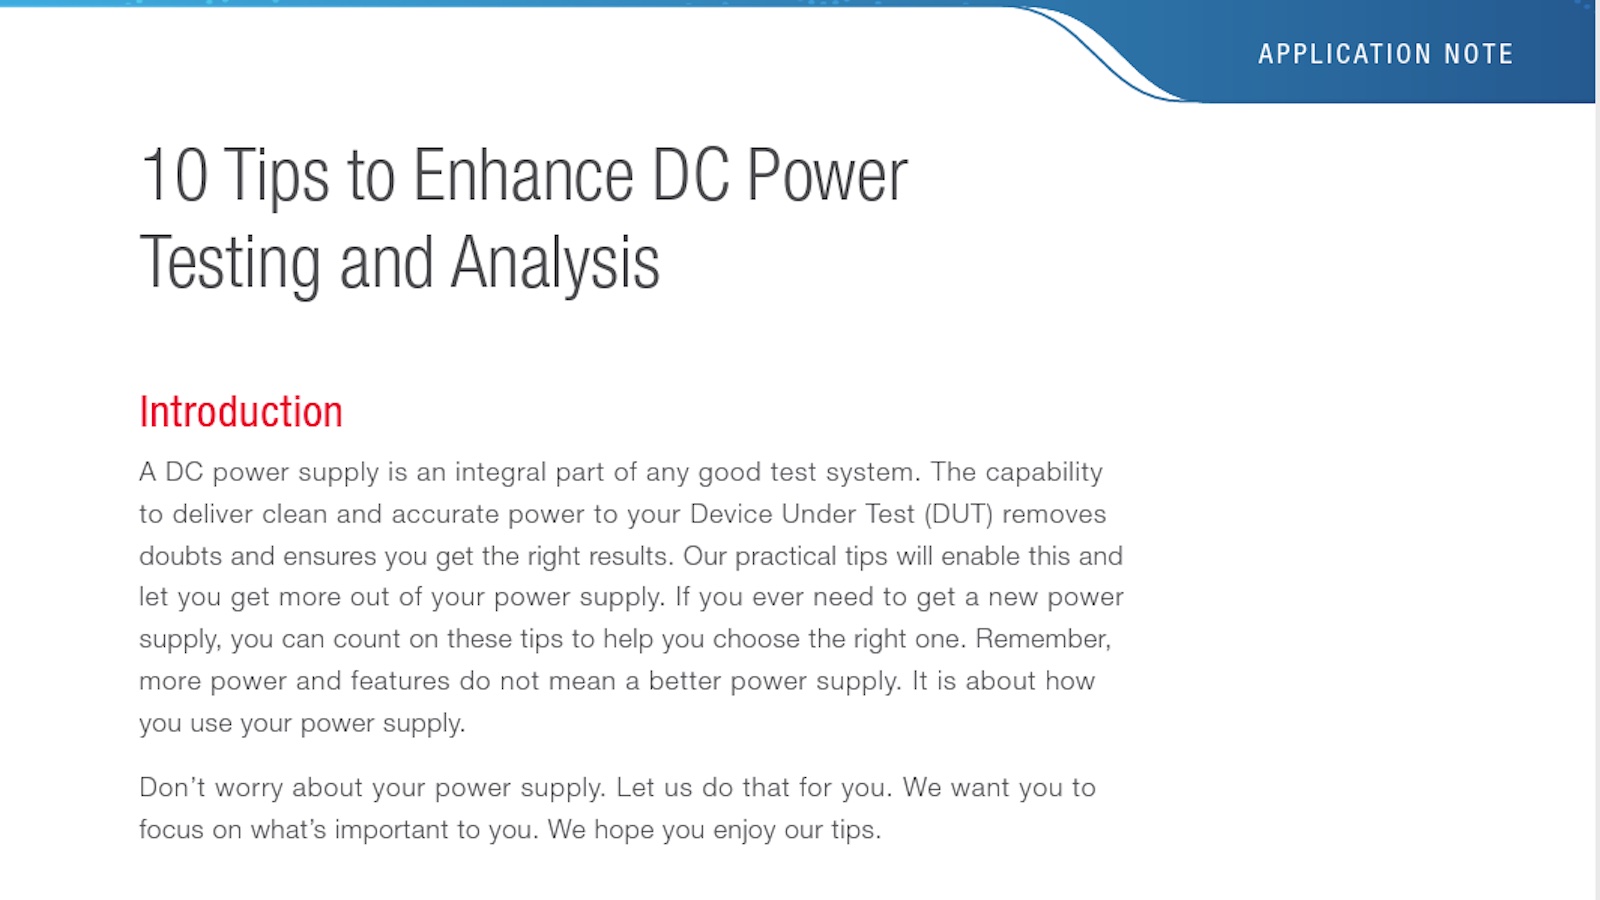 10 Tips to Enhance DC Power Testing